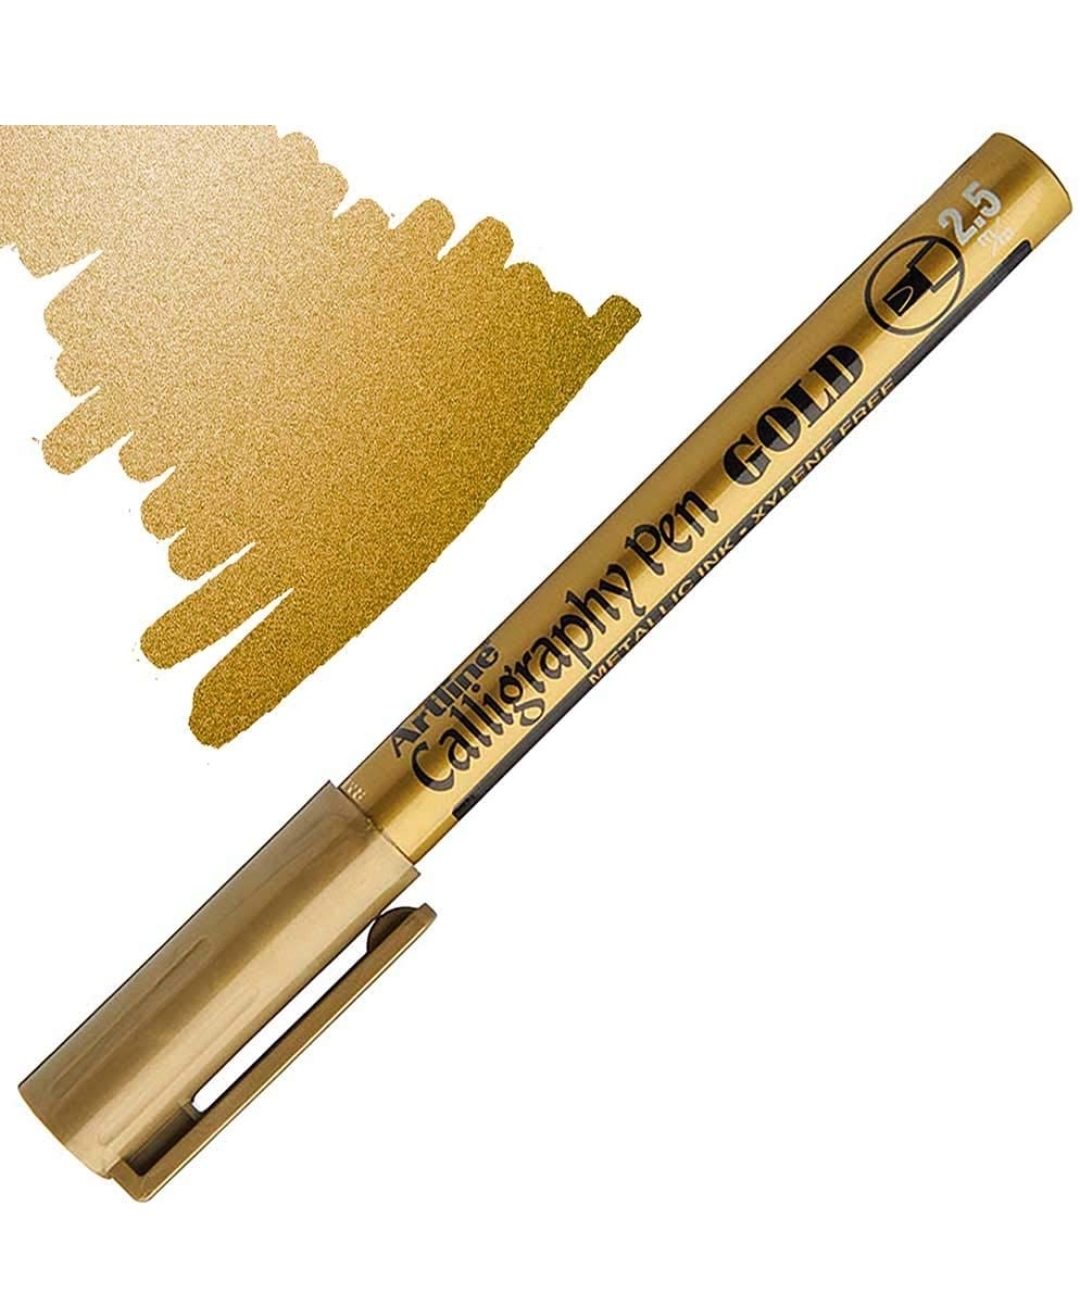 Artline Calligraphy Pen Gold Metallic Ink Pen Tip Size 2.5 mm Pack of 1